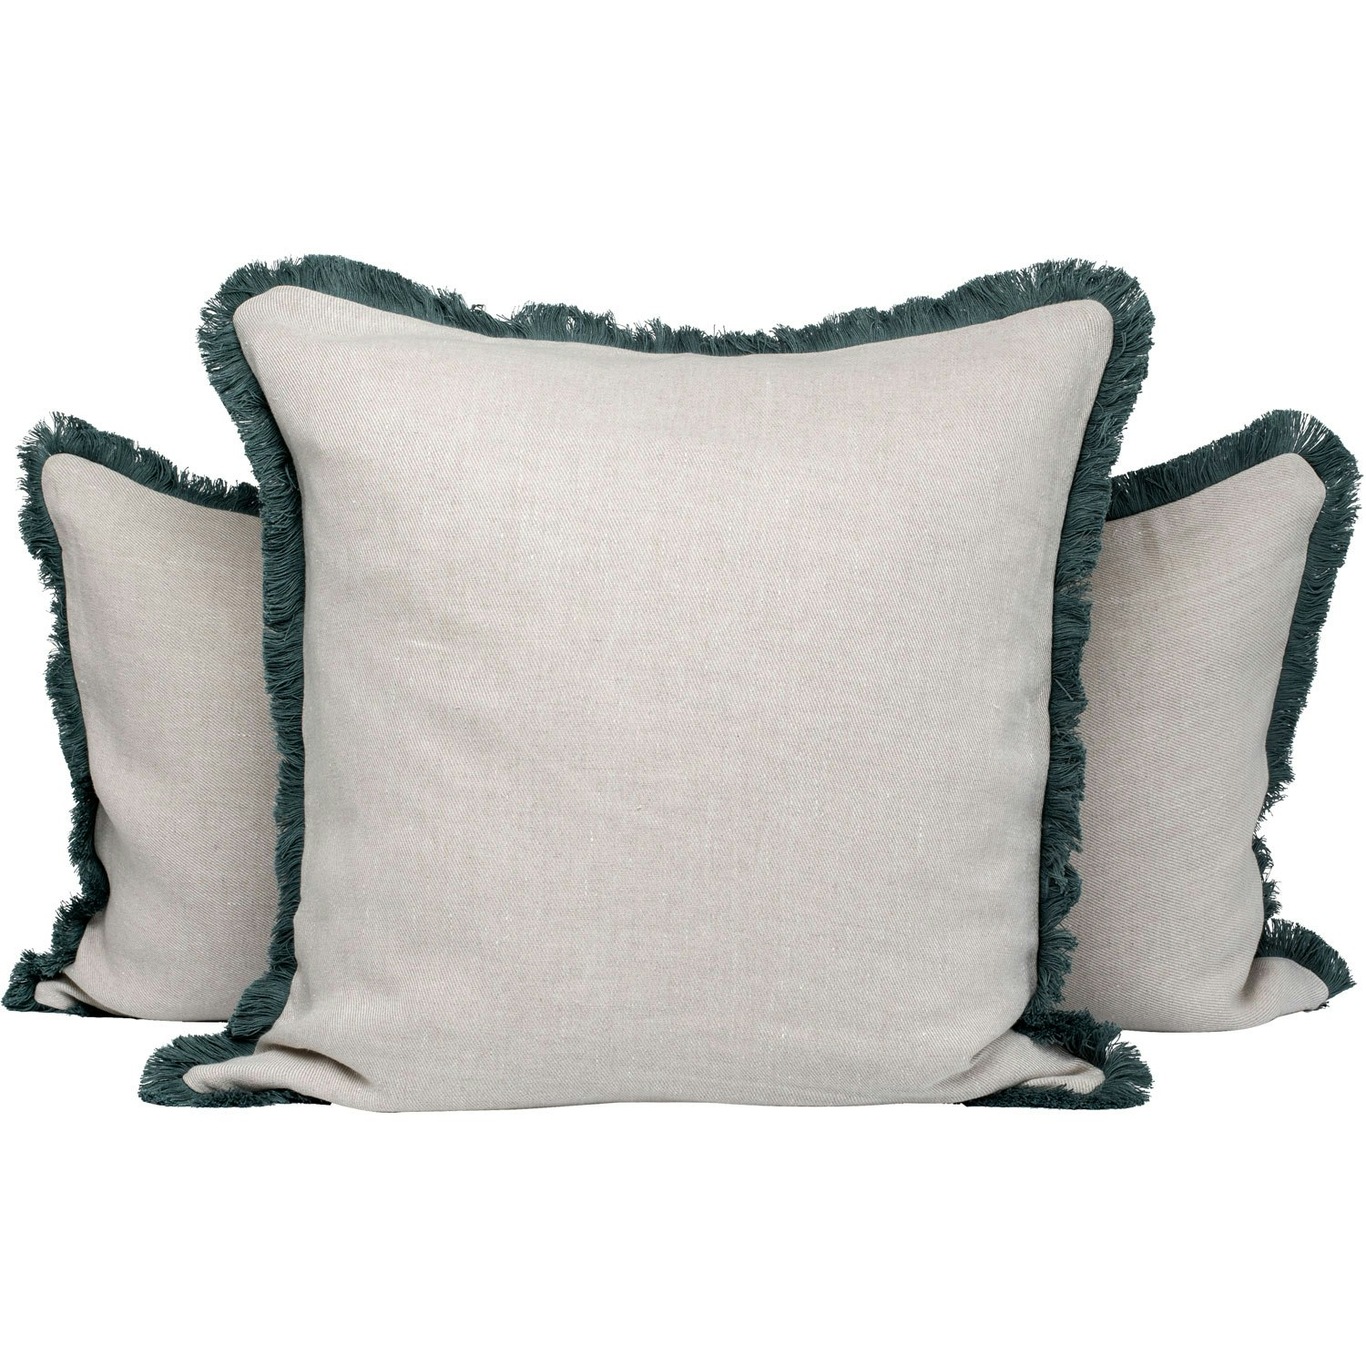 Pienza Cushion Cover 50x50 cm, Beige/Green